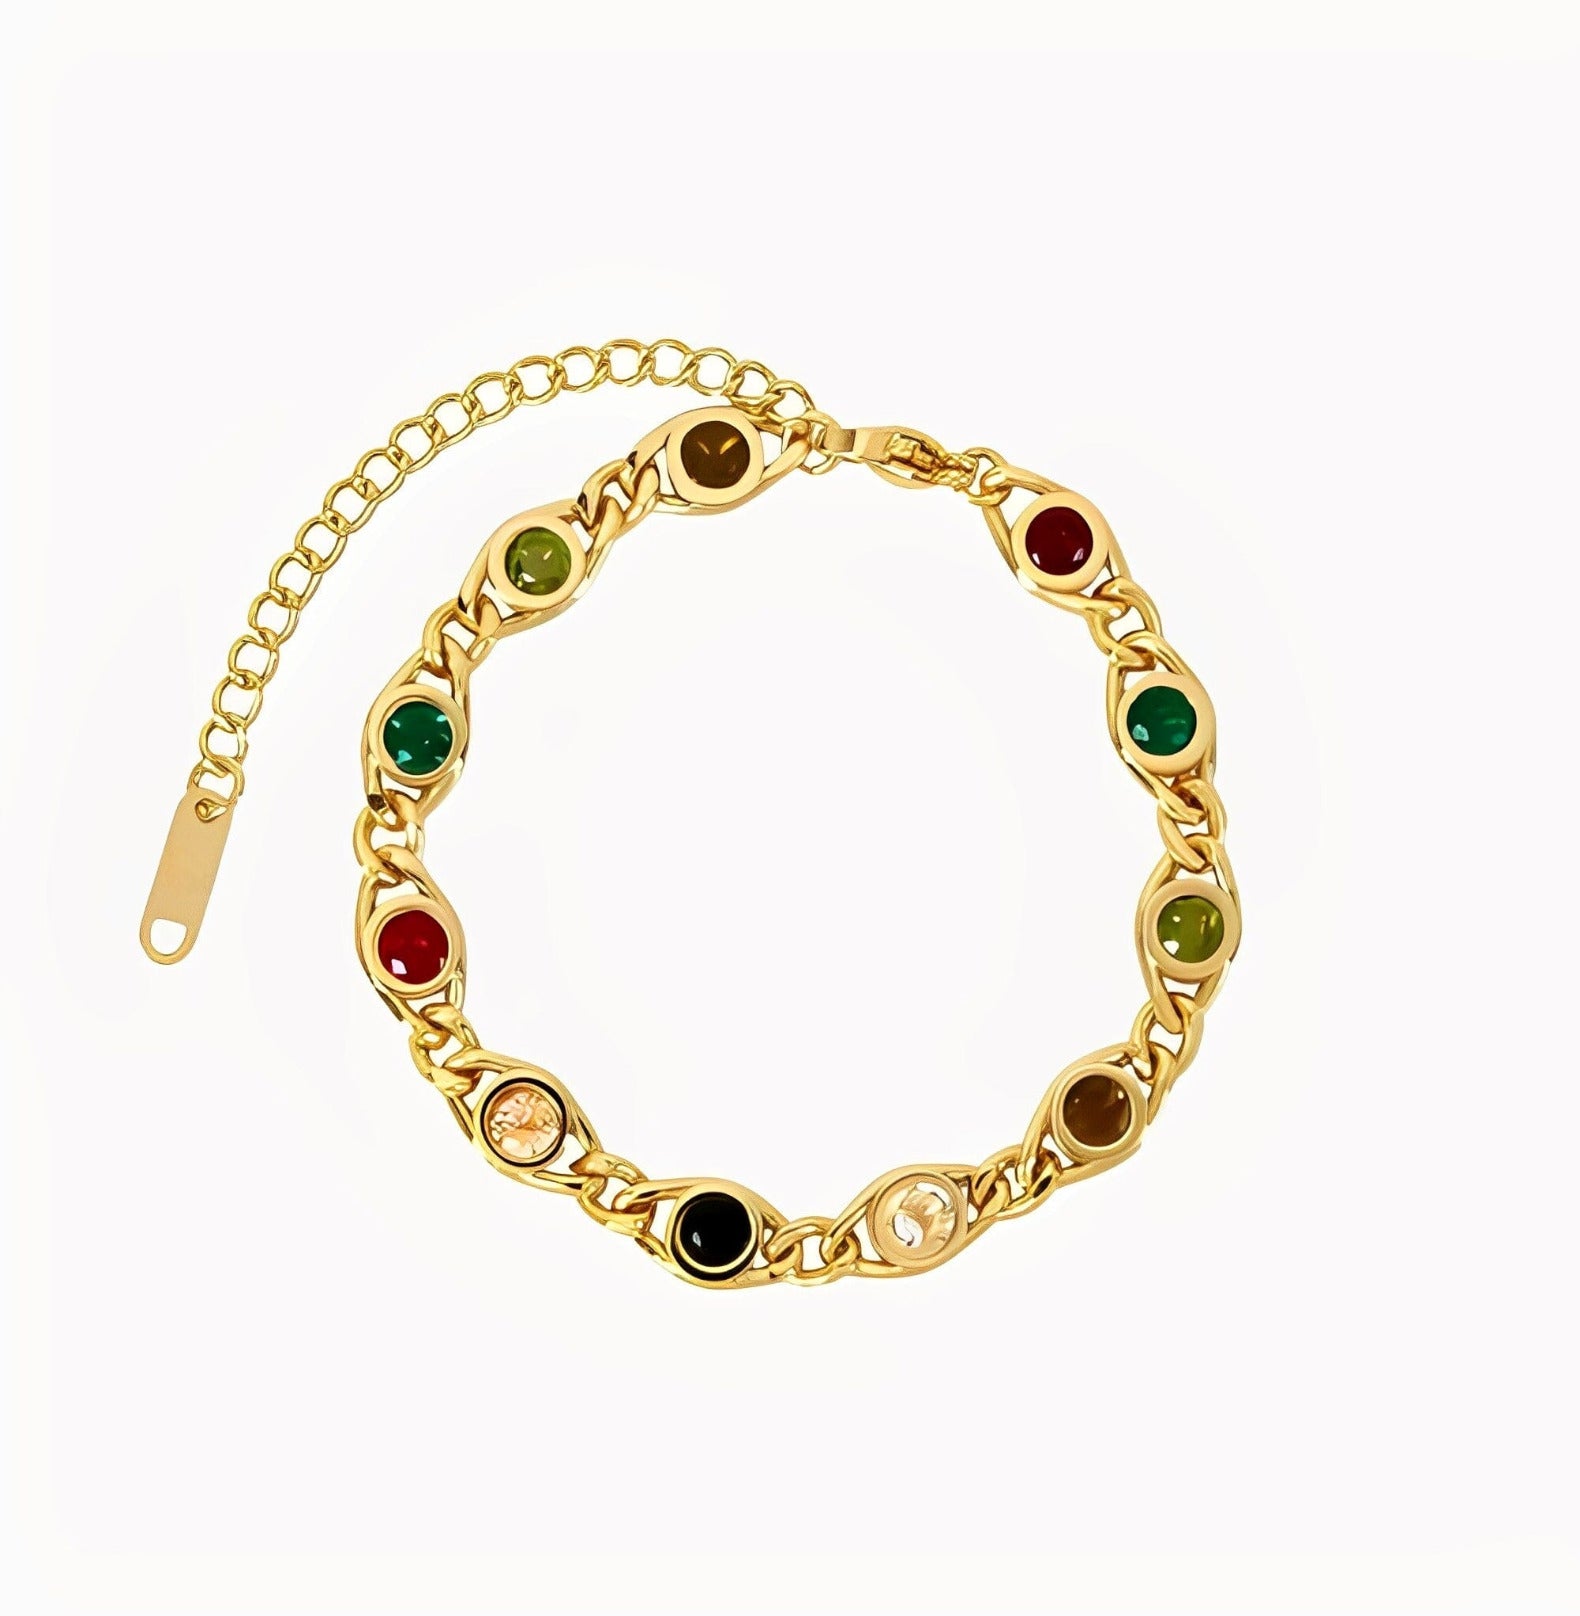 GEM STONE BRACELET neck Yubama Jewelry Online Store - The Elegant Designs of Gold and Silver ! Bracelet 